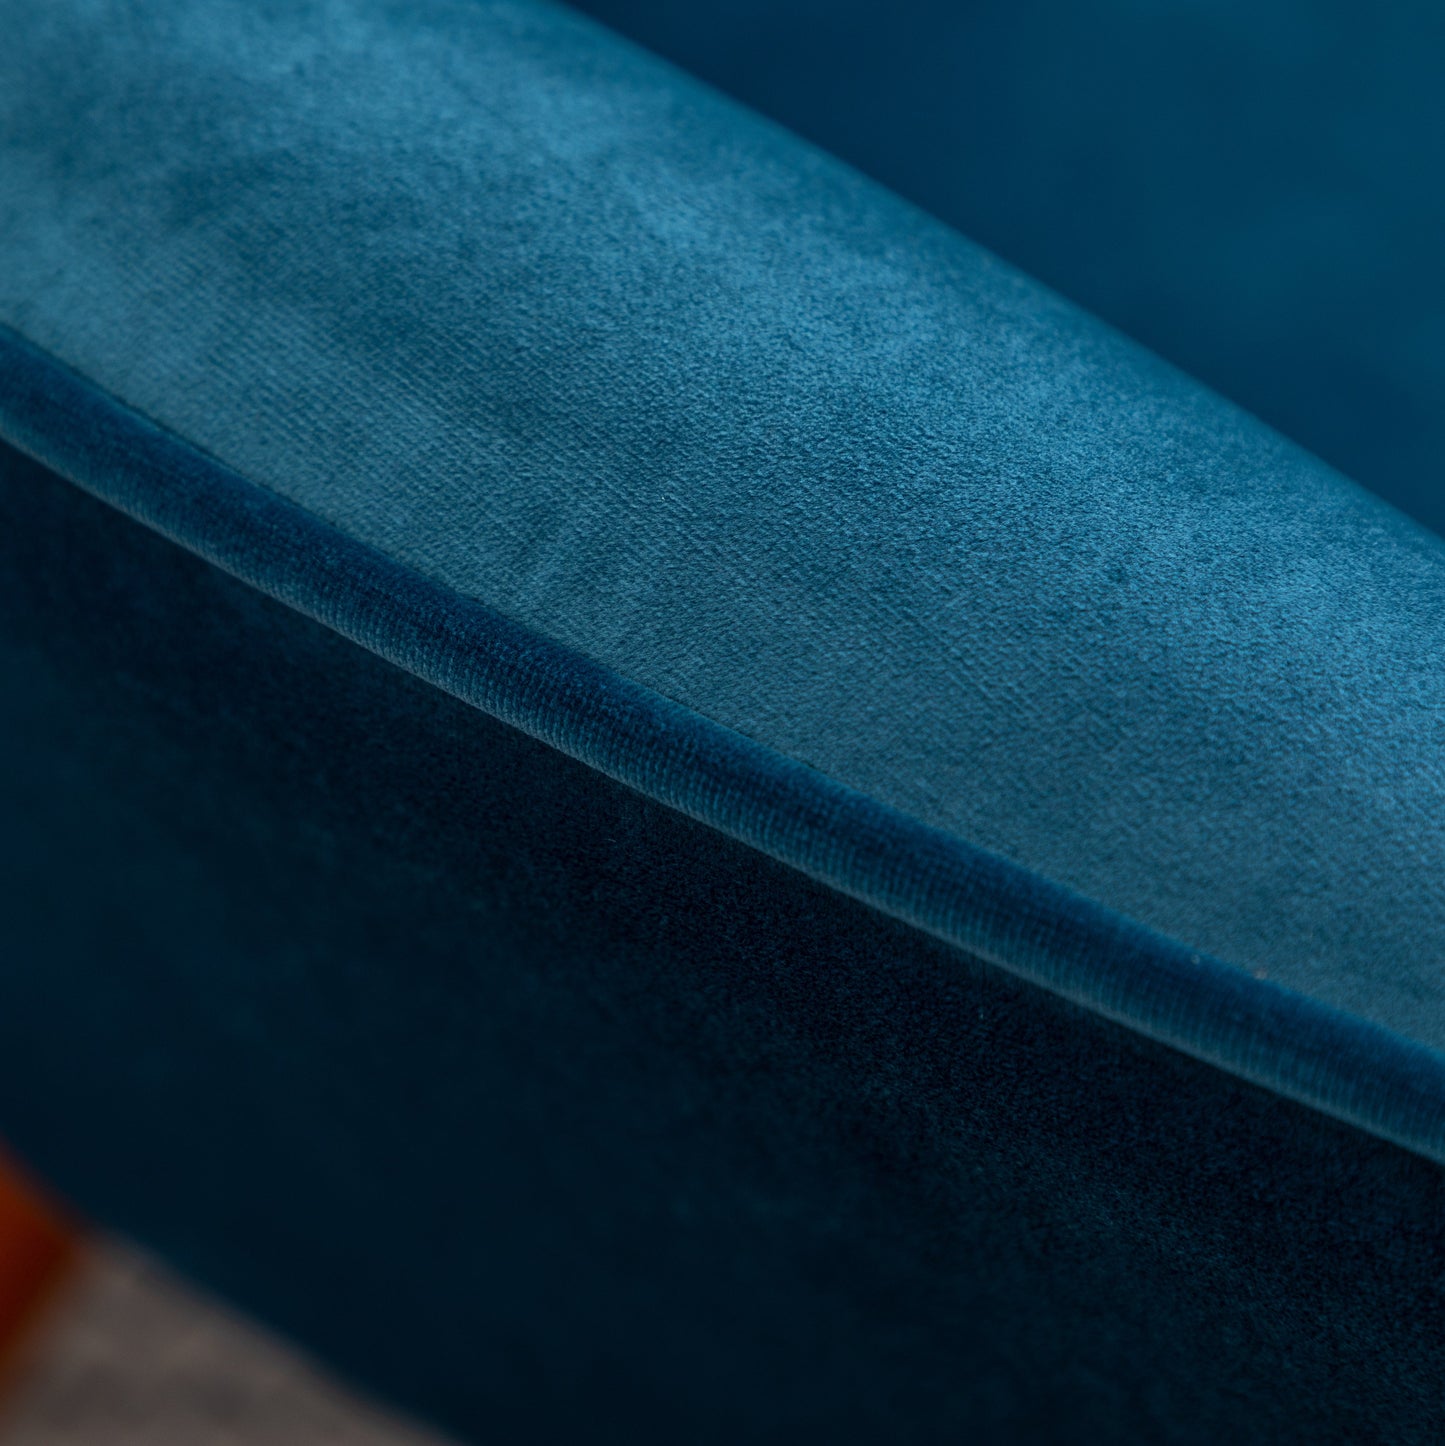 Leiria Contemporary Silky Velvet Tufted Accent Chair with Ottoman, Blue